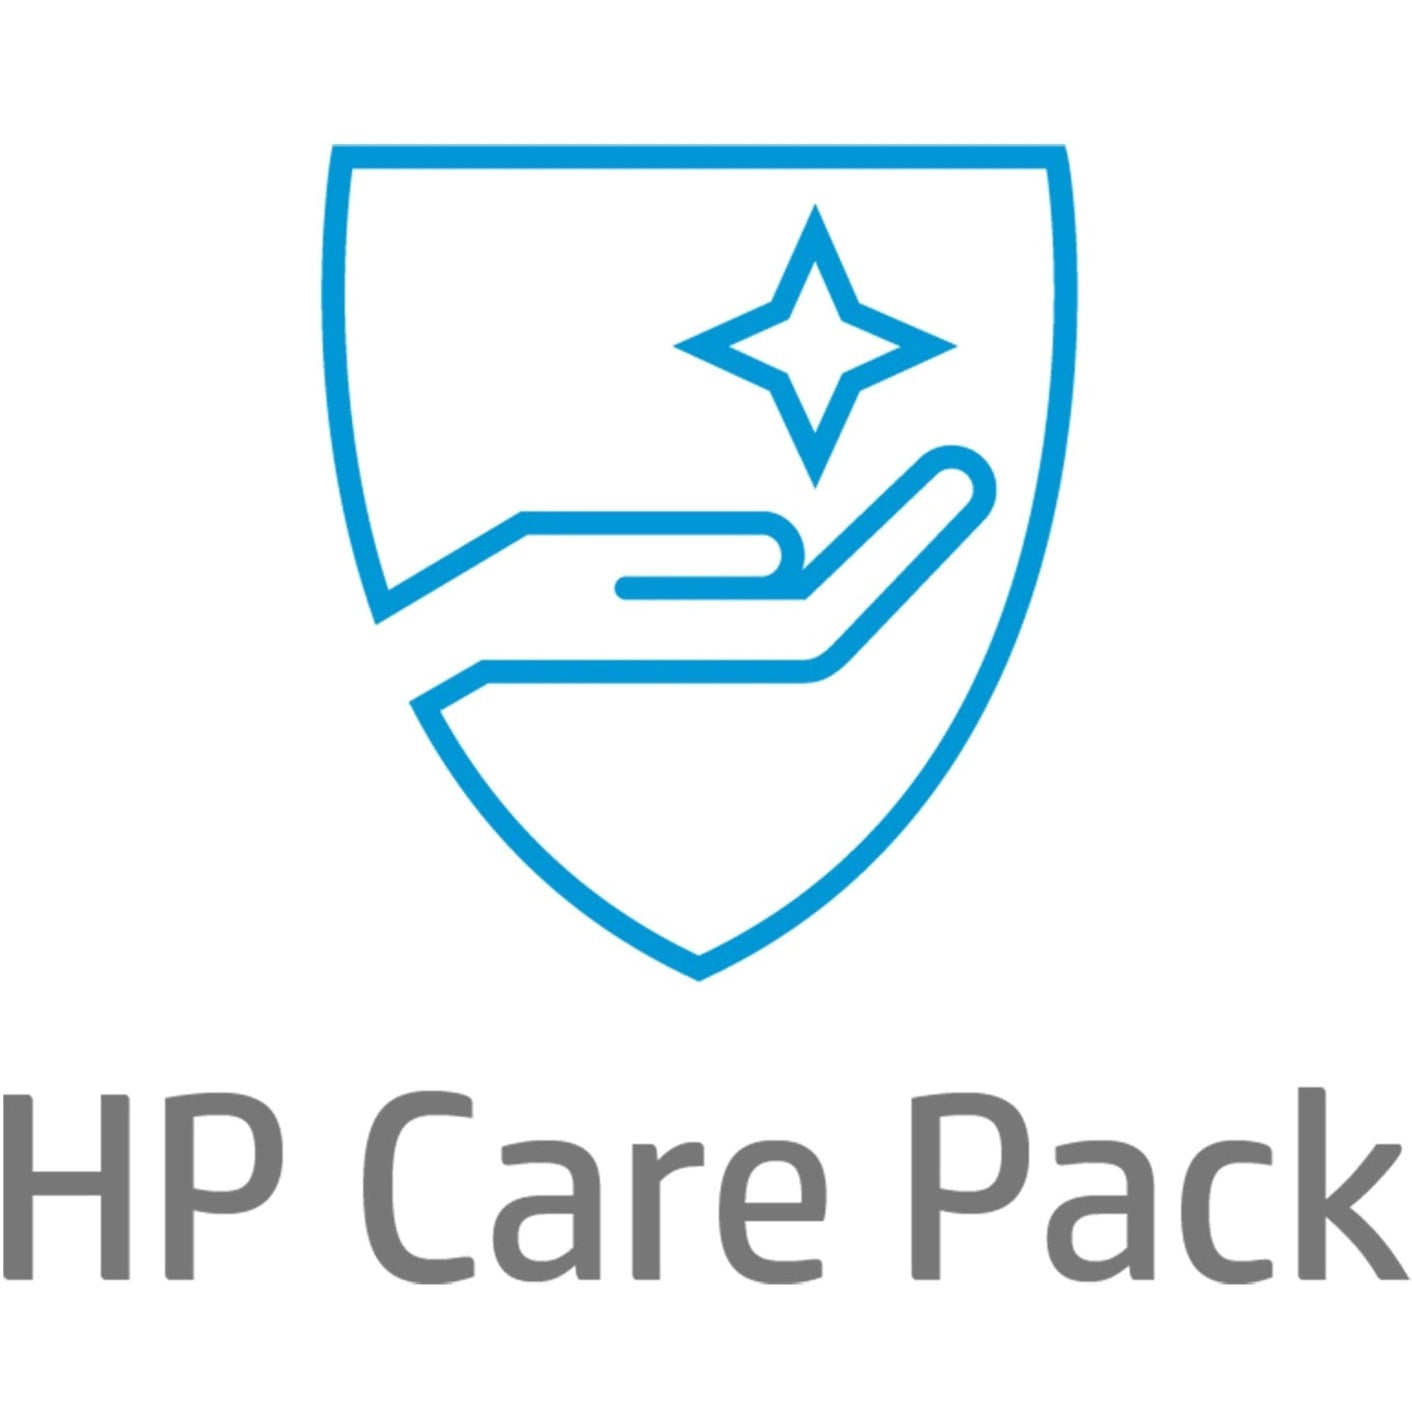 HP Care Pack - 3 Year - Warranty (U4418E)